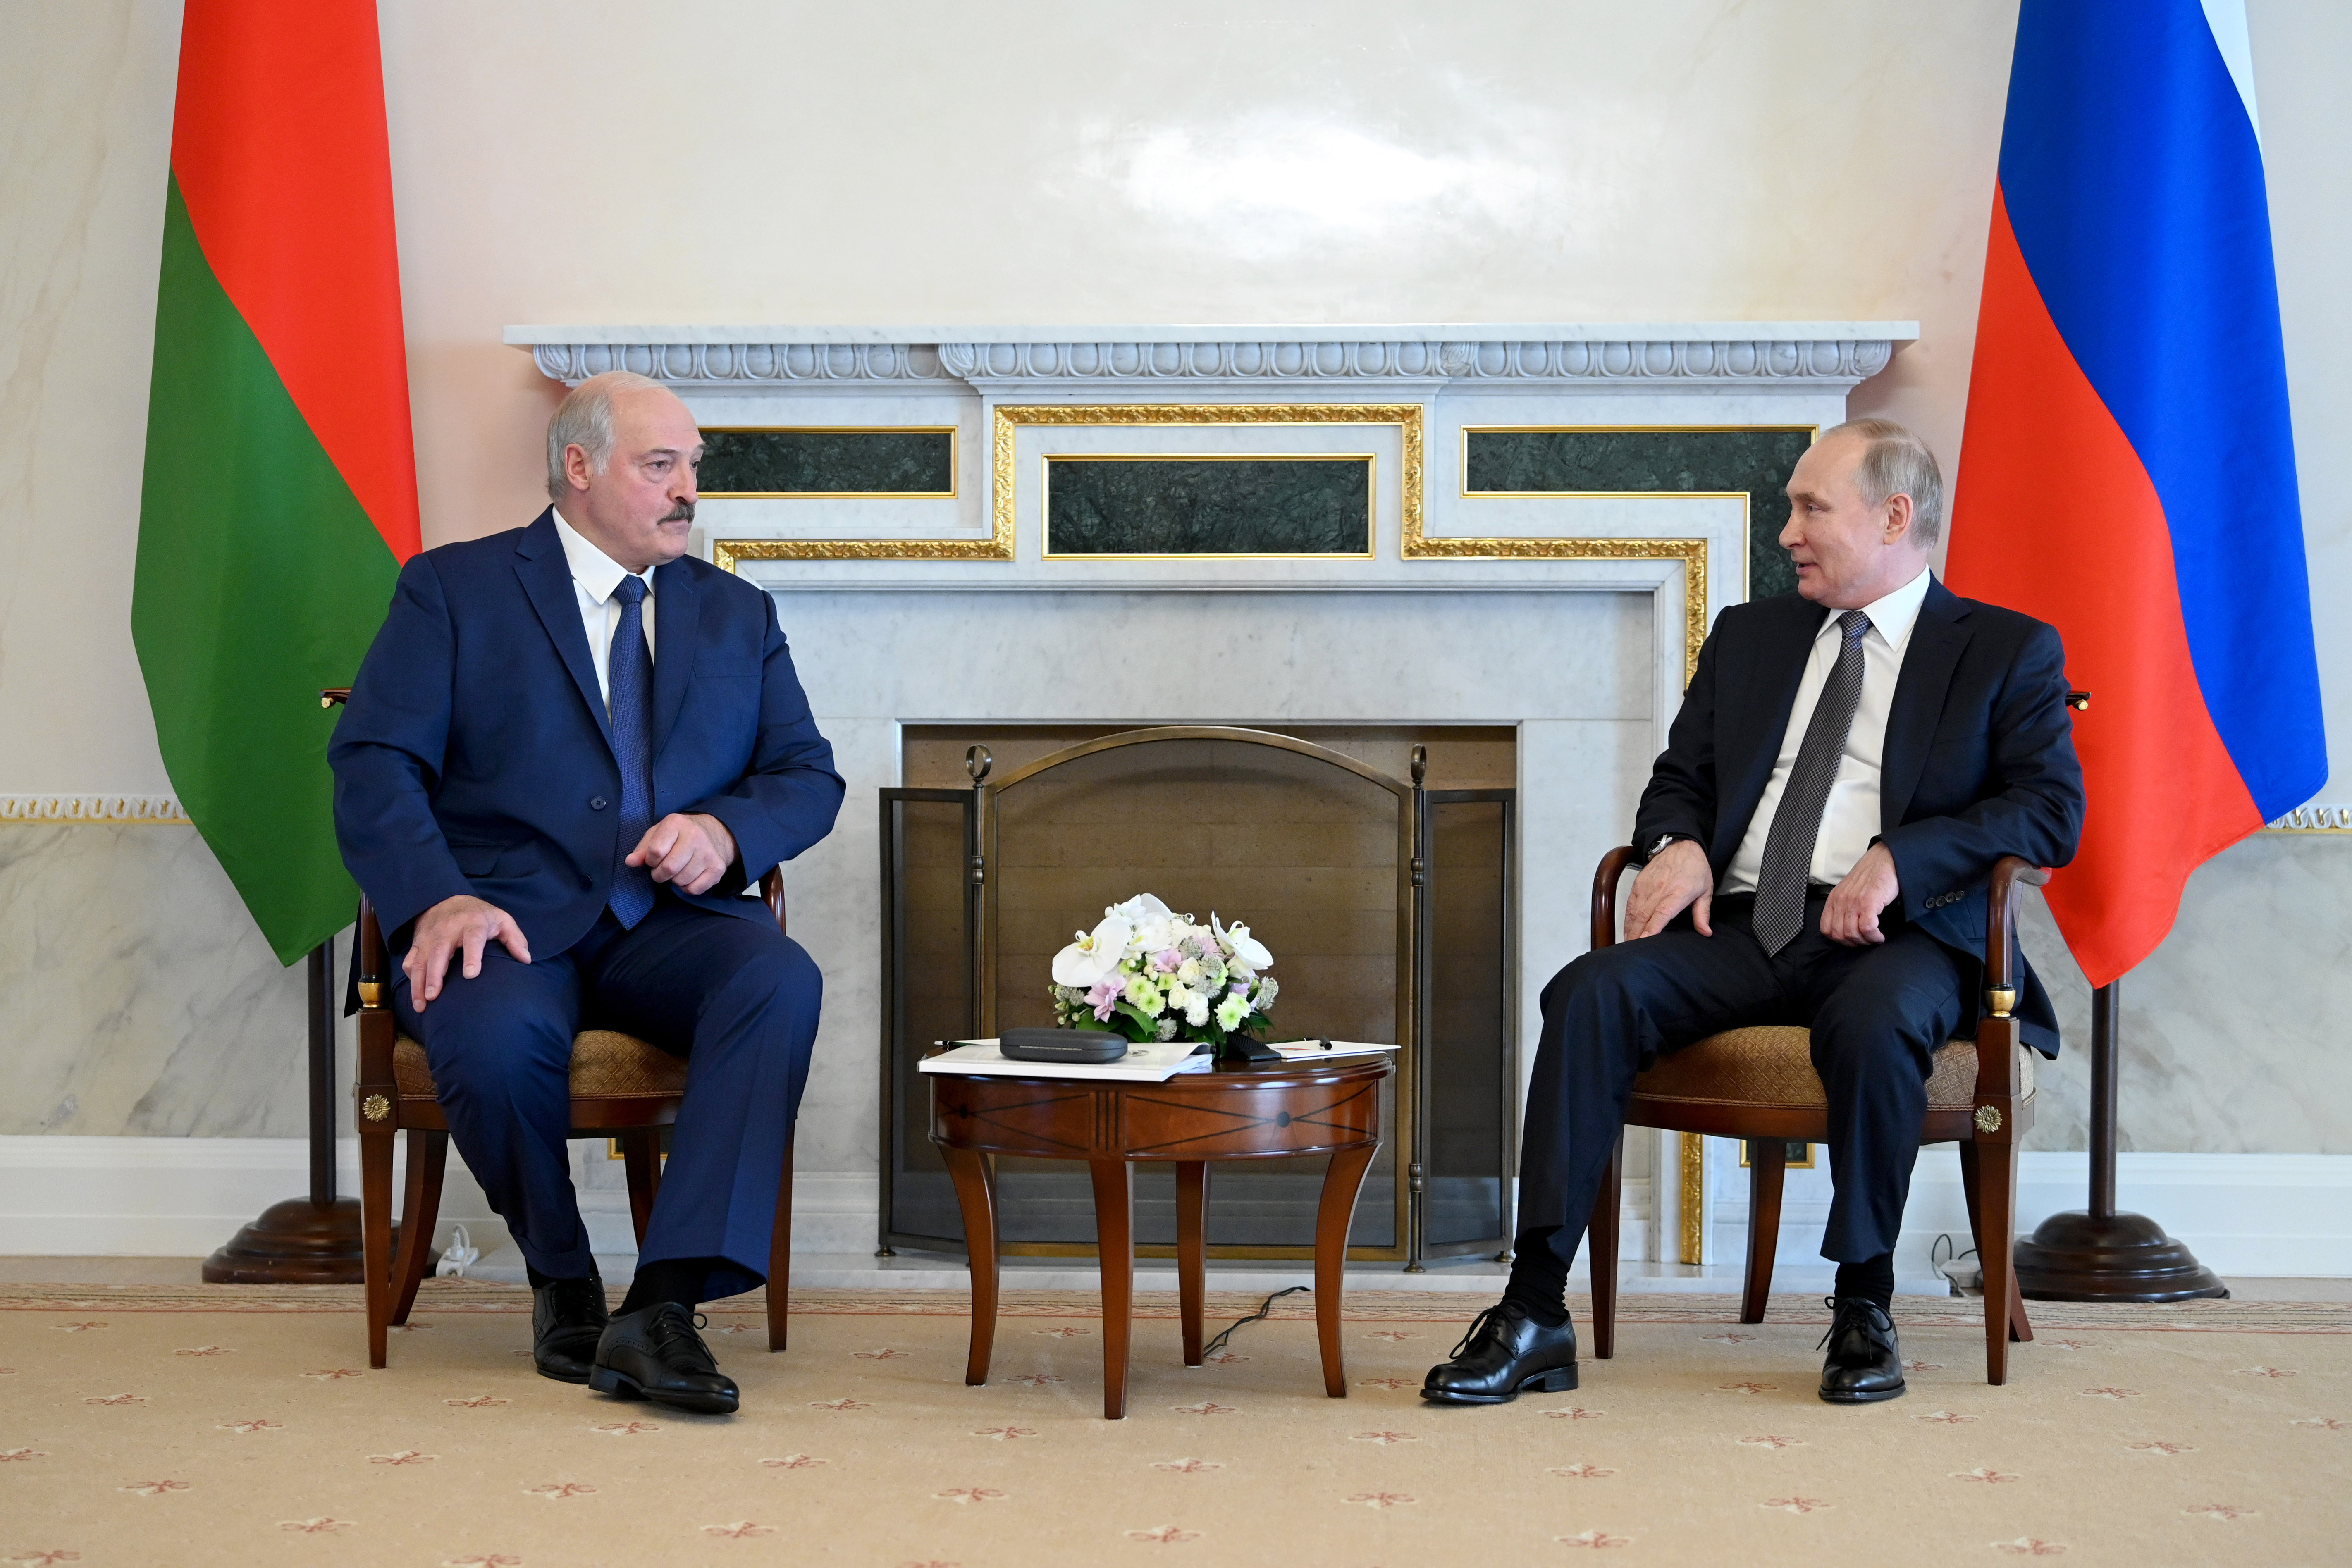 Надежное партнерство России и Беларуси